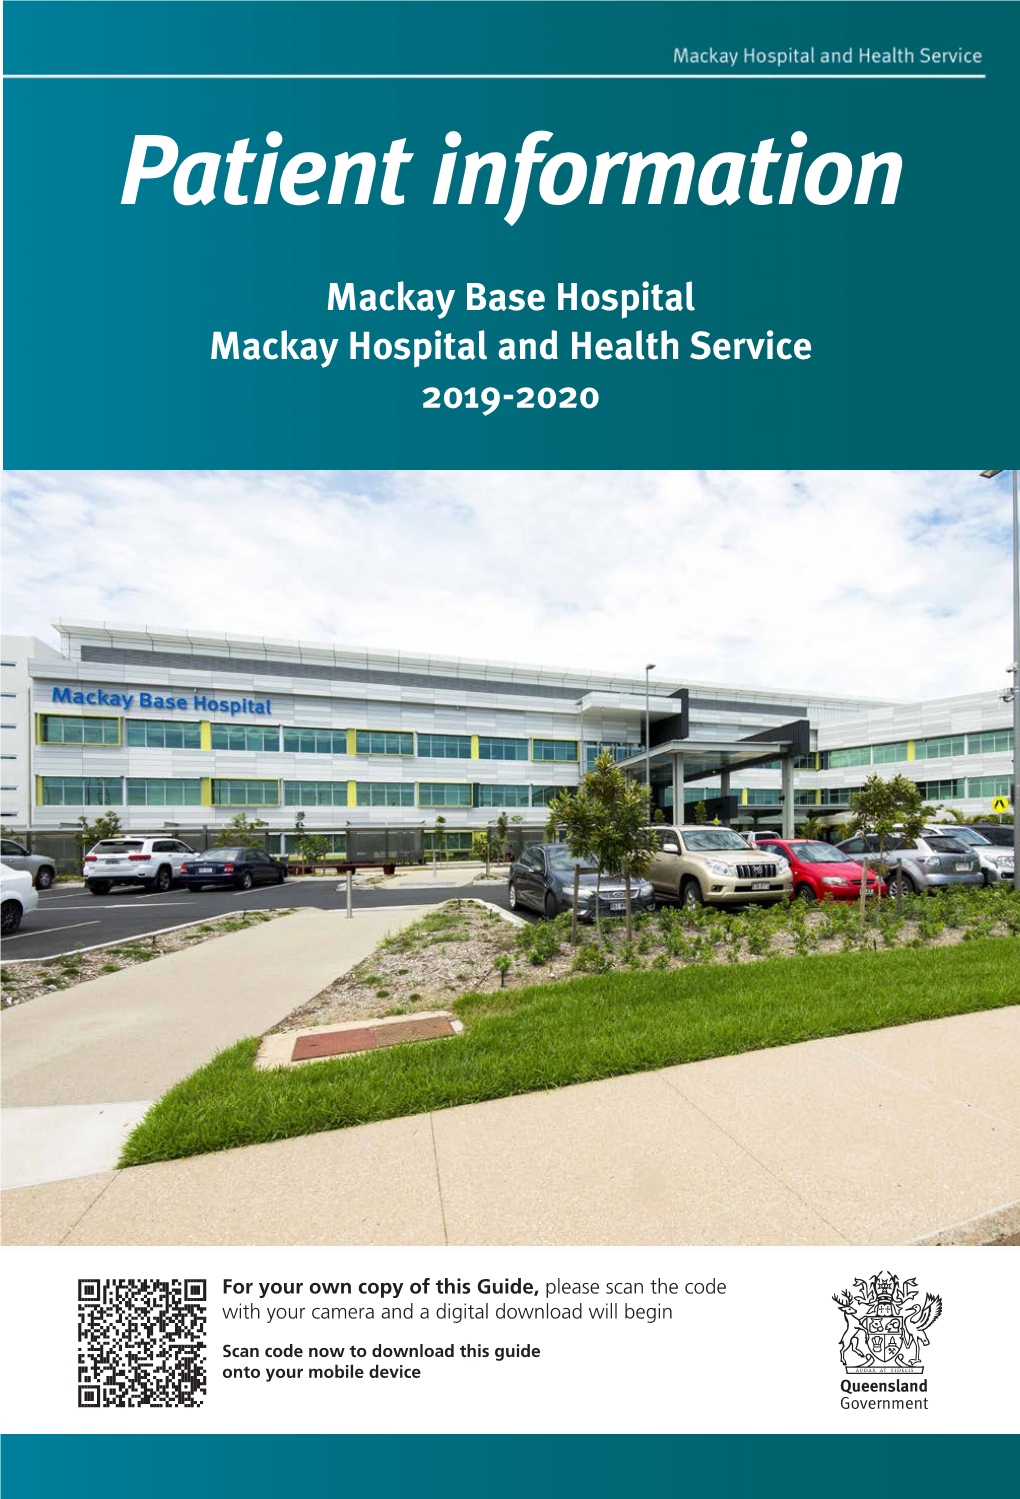 The Mackay Base Hospital